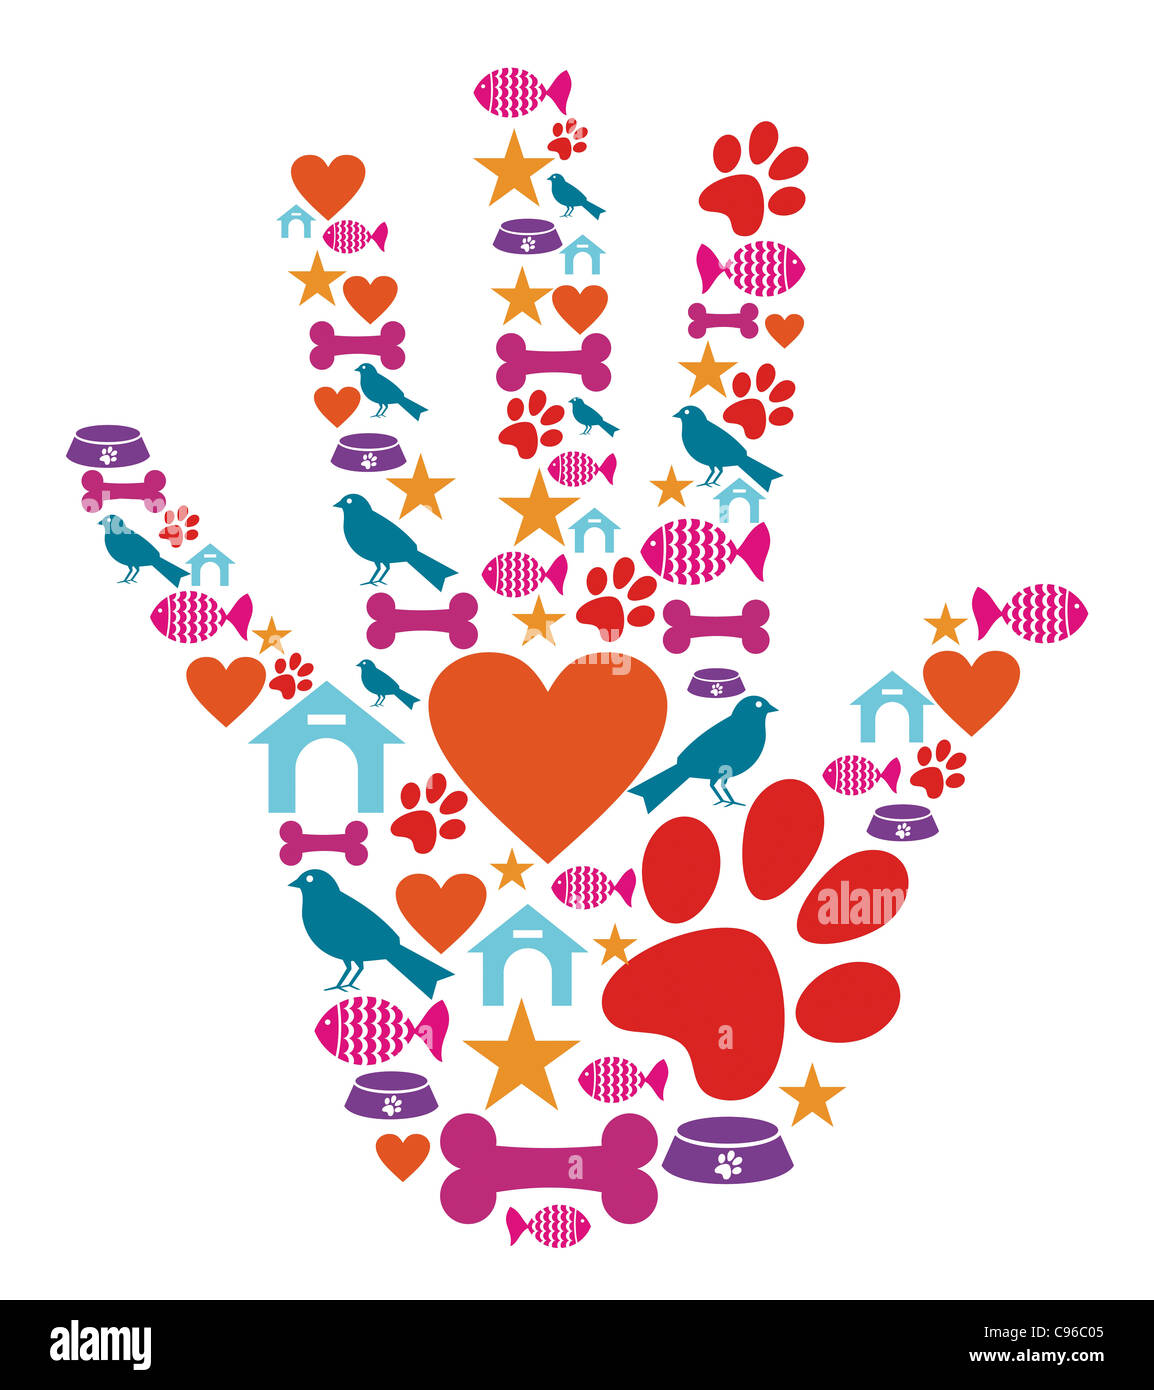 Human hand shape with animal pet protection icons set. Stock Photo